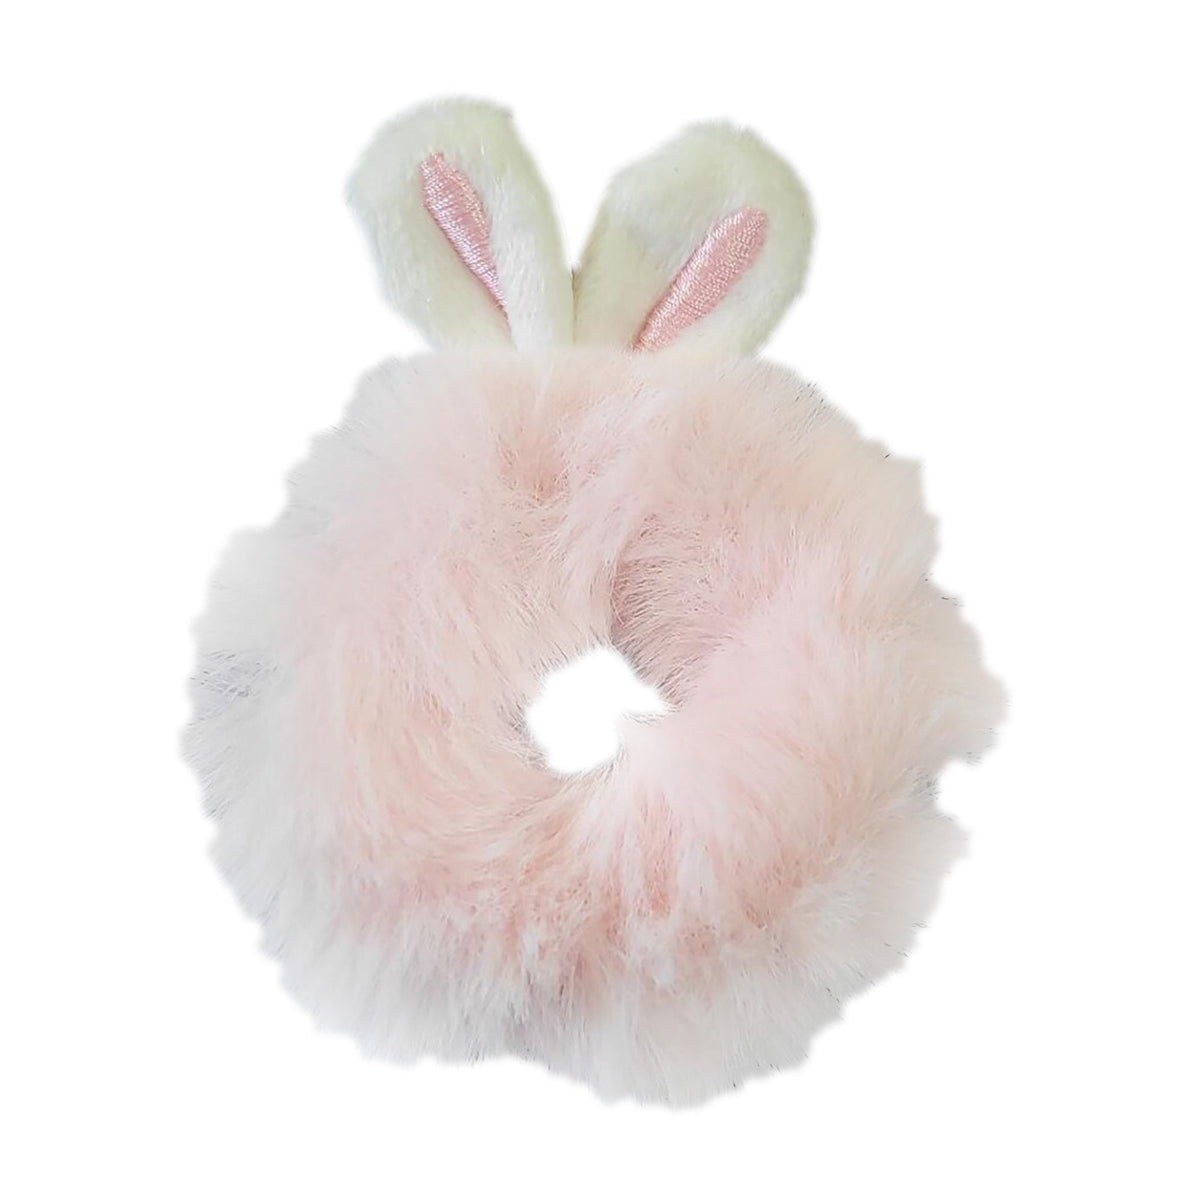 SHENZHEN DASHENG ELECTRONIC TECHNOLOGY CO. Impulse Buying Fluffy Bunny Scrunchie, 1 Count